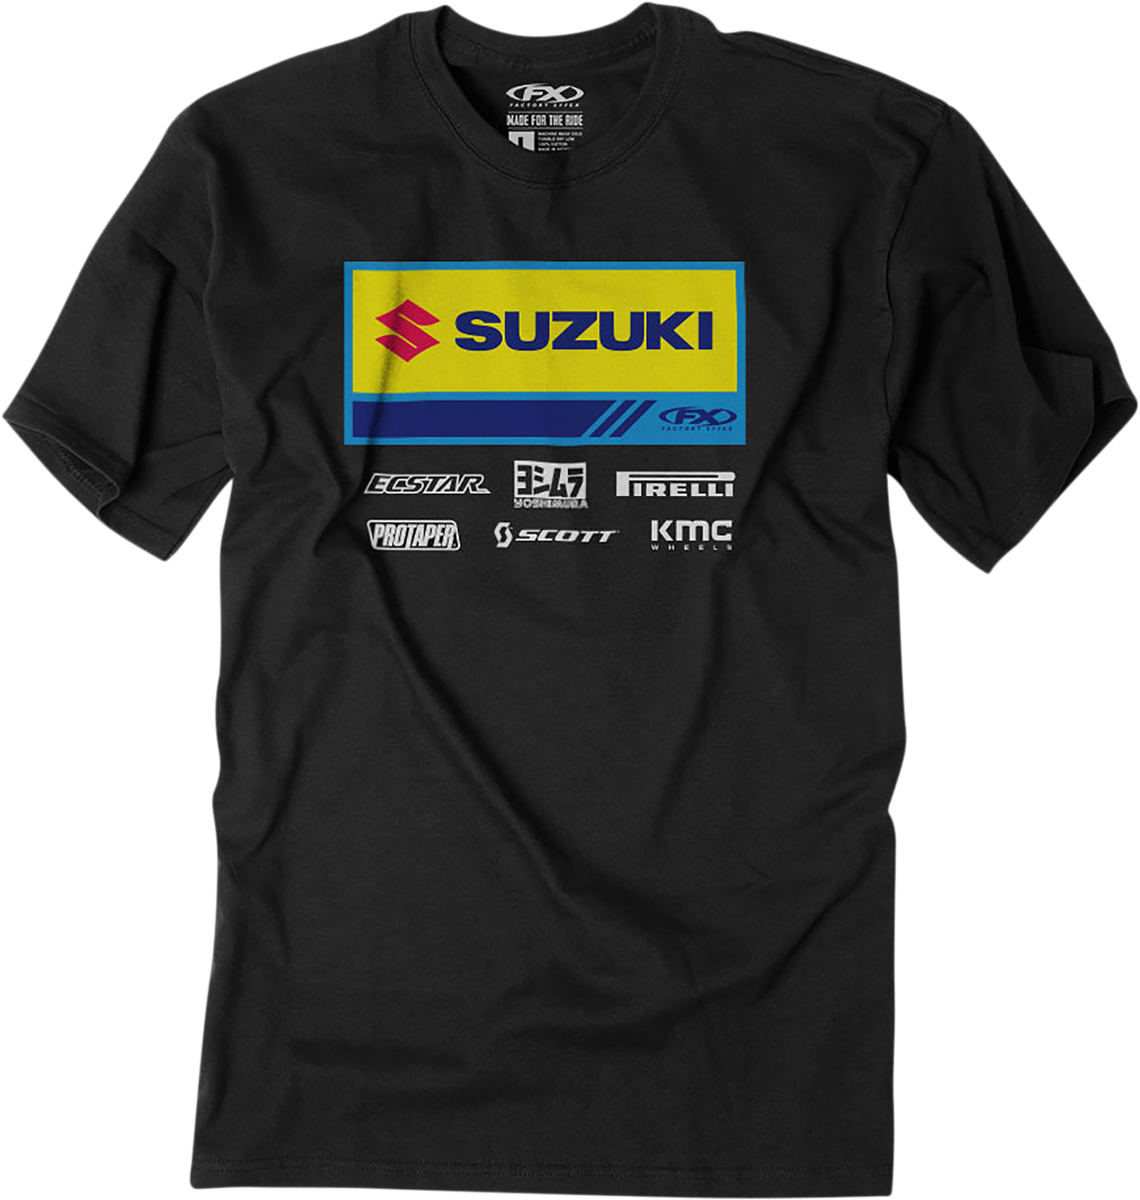 FACTORY EFFEX Suzuki 21 Racewear T-Shirt - Black - Medium 24-87422